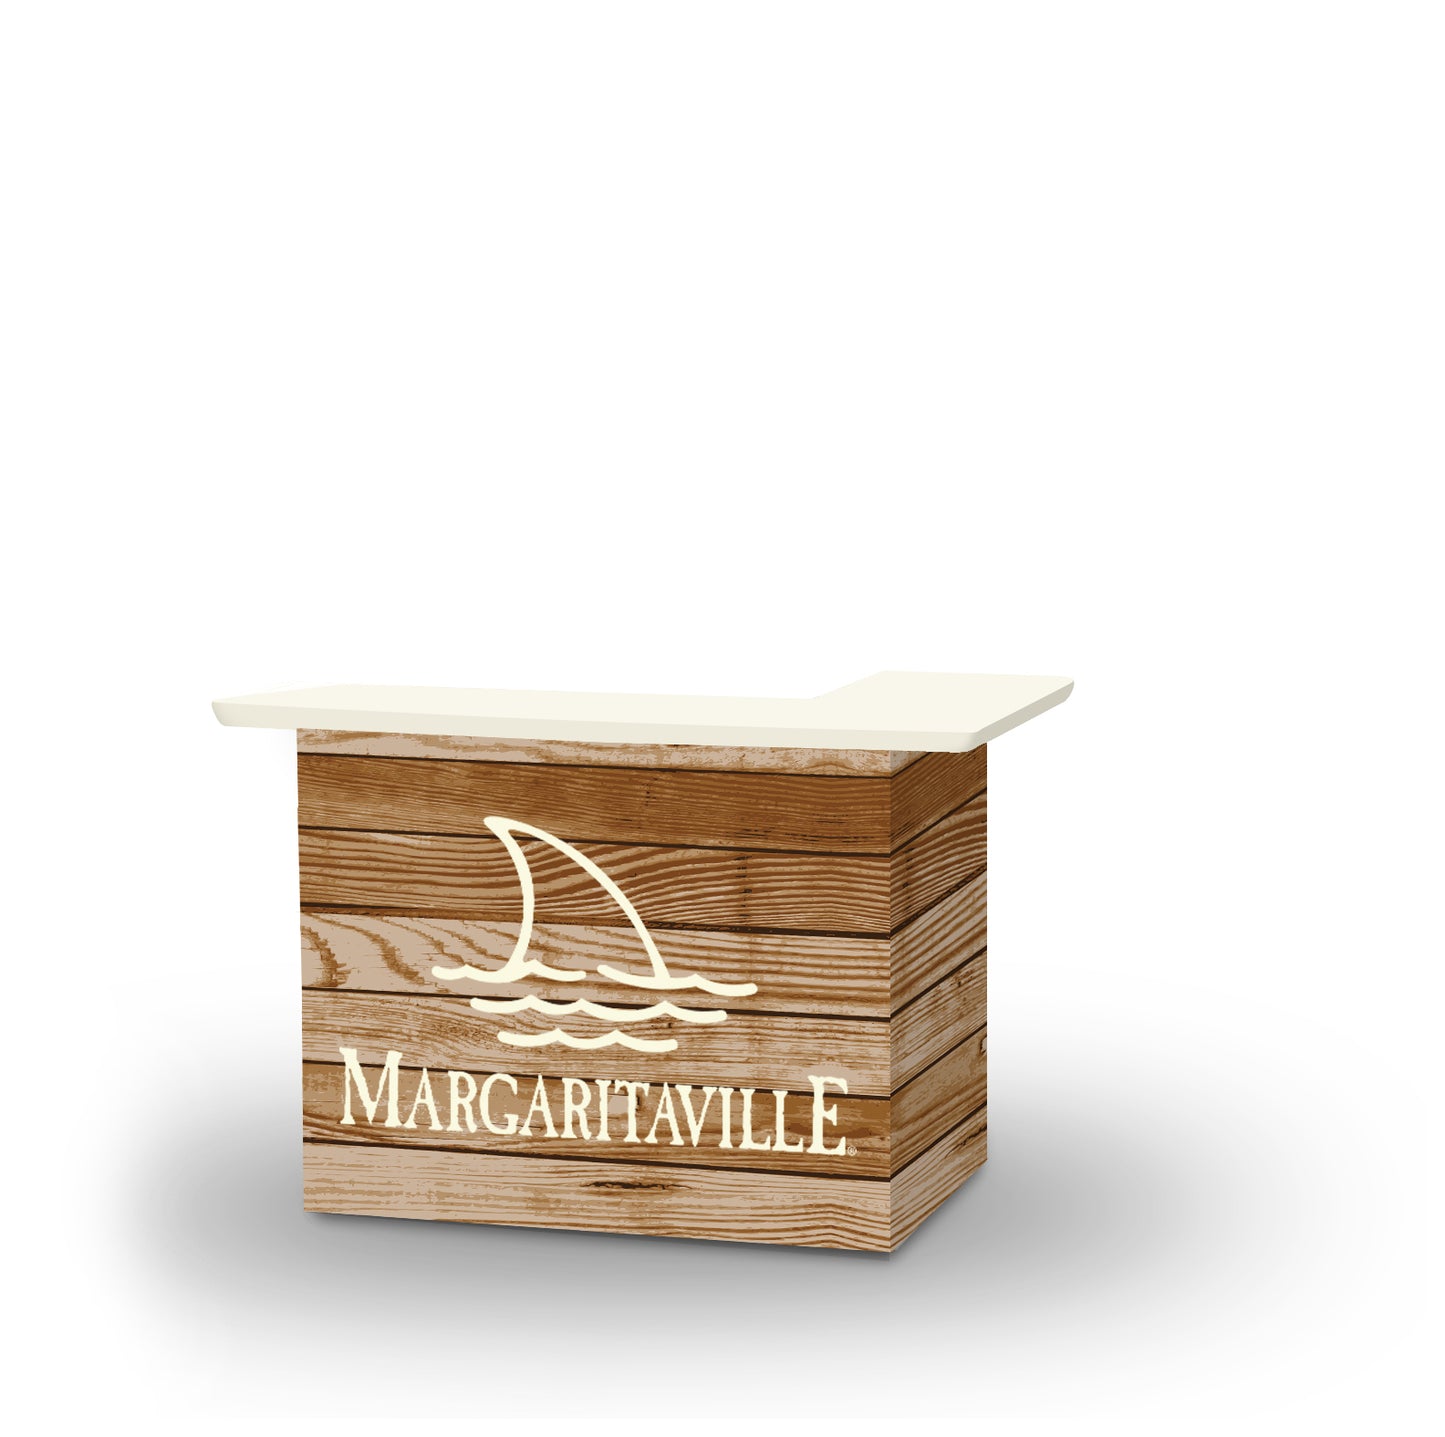 Margaritaville - Shark Fin Classic